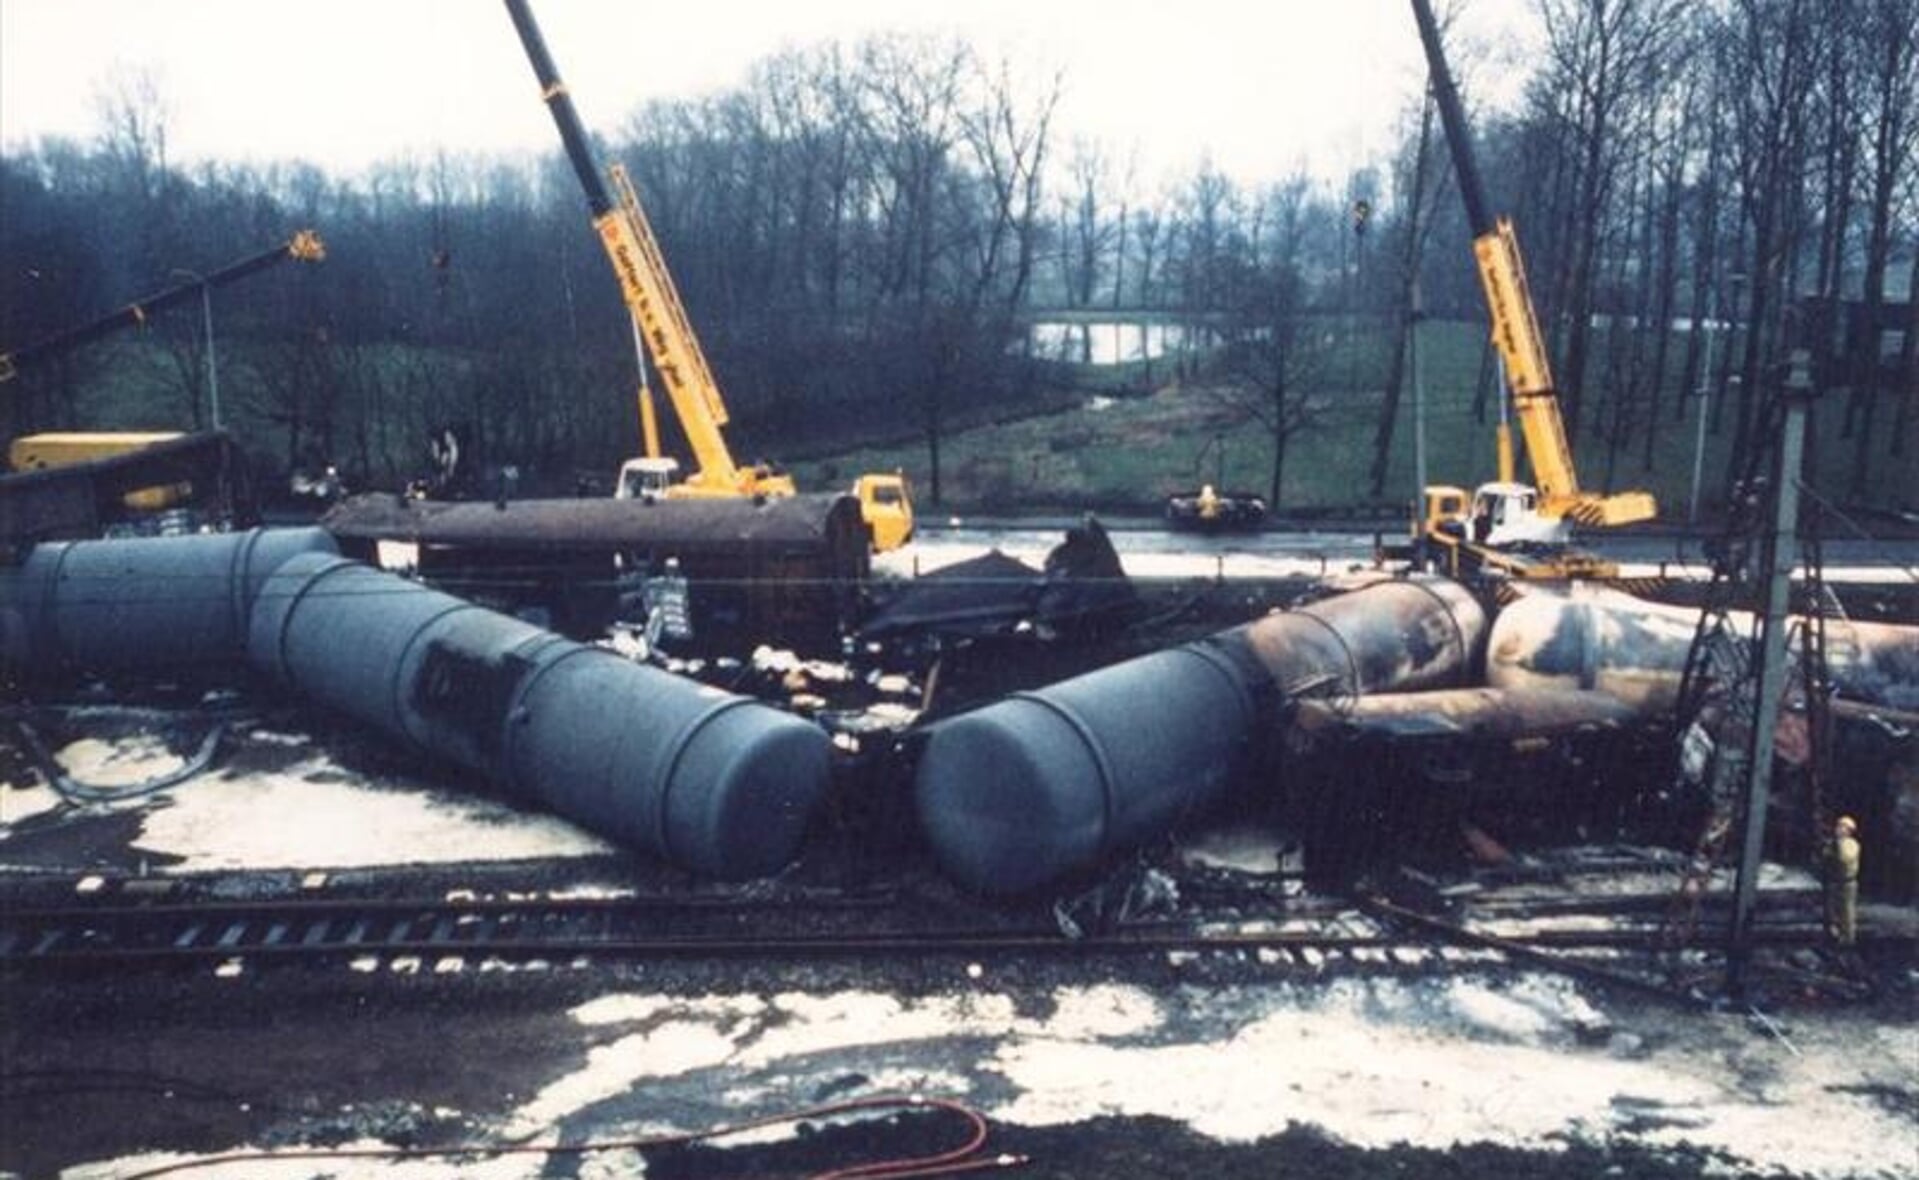 archieffoto van de treinramp in 1989